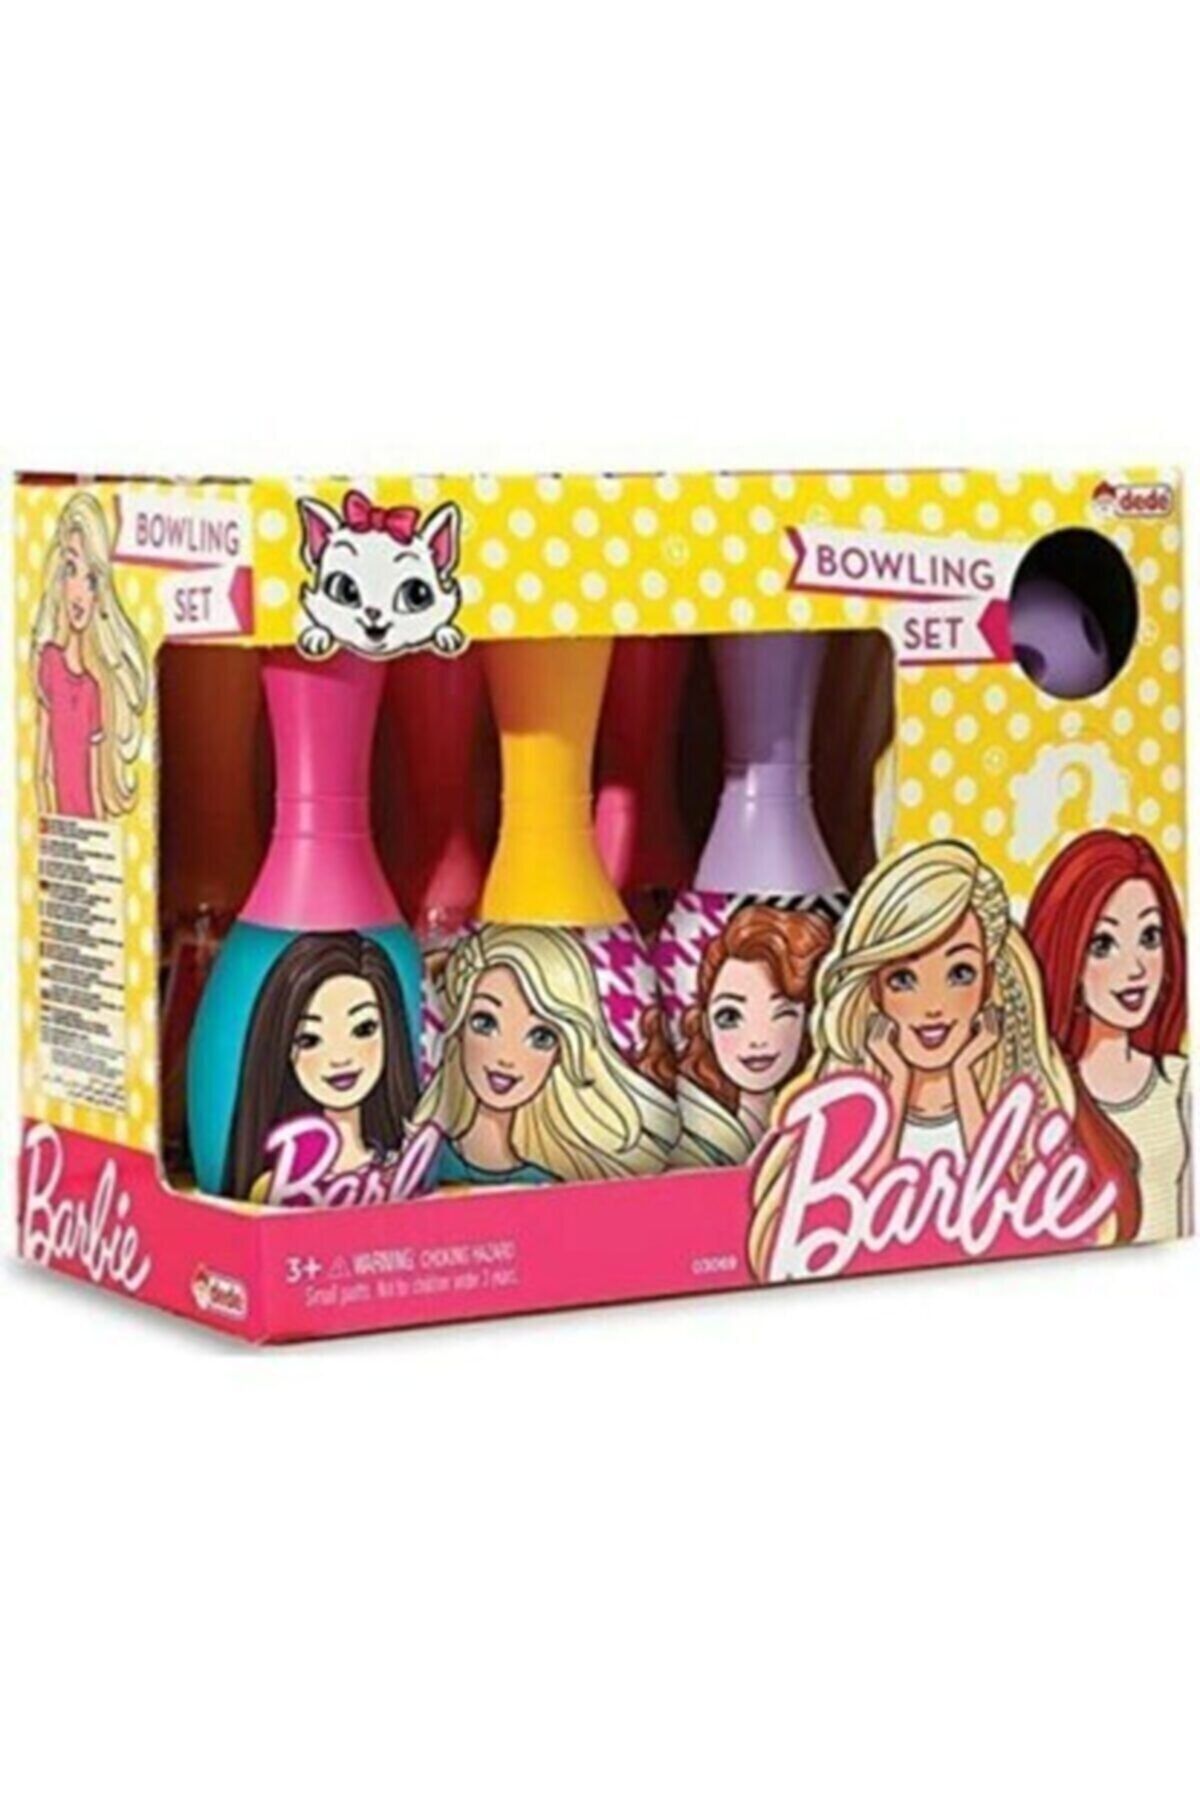 DEDE Barbie Bowling Set